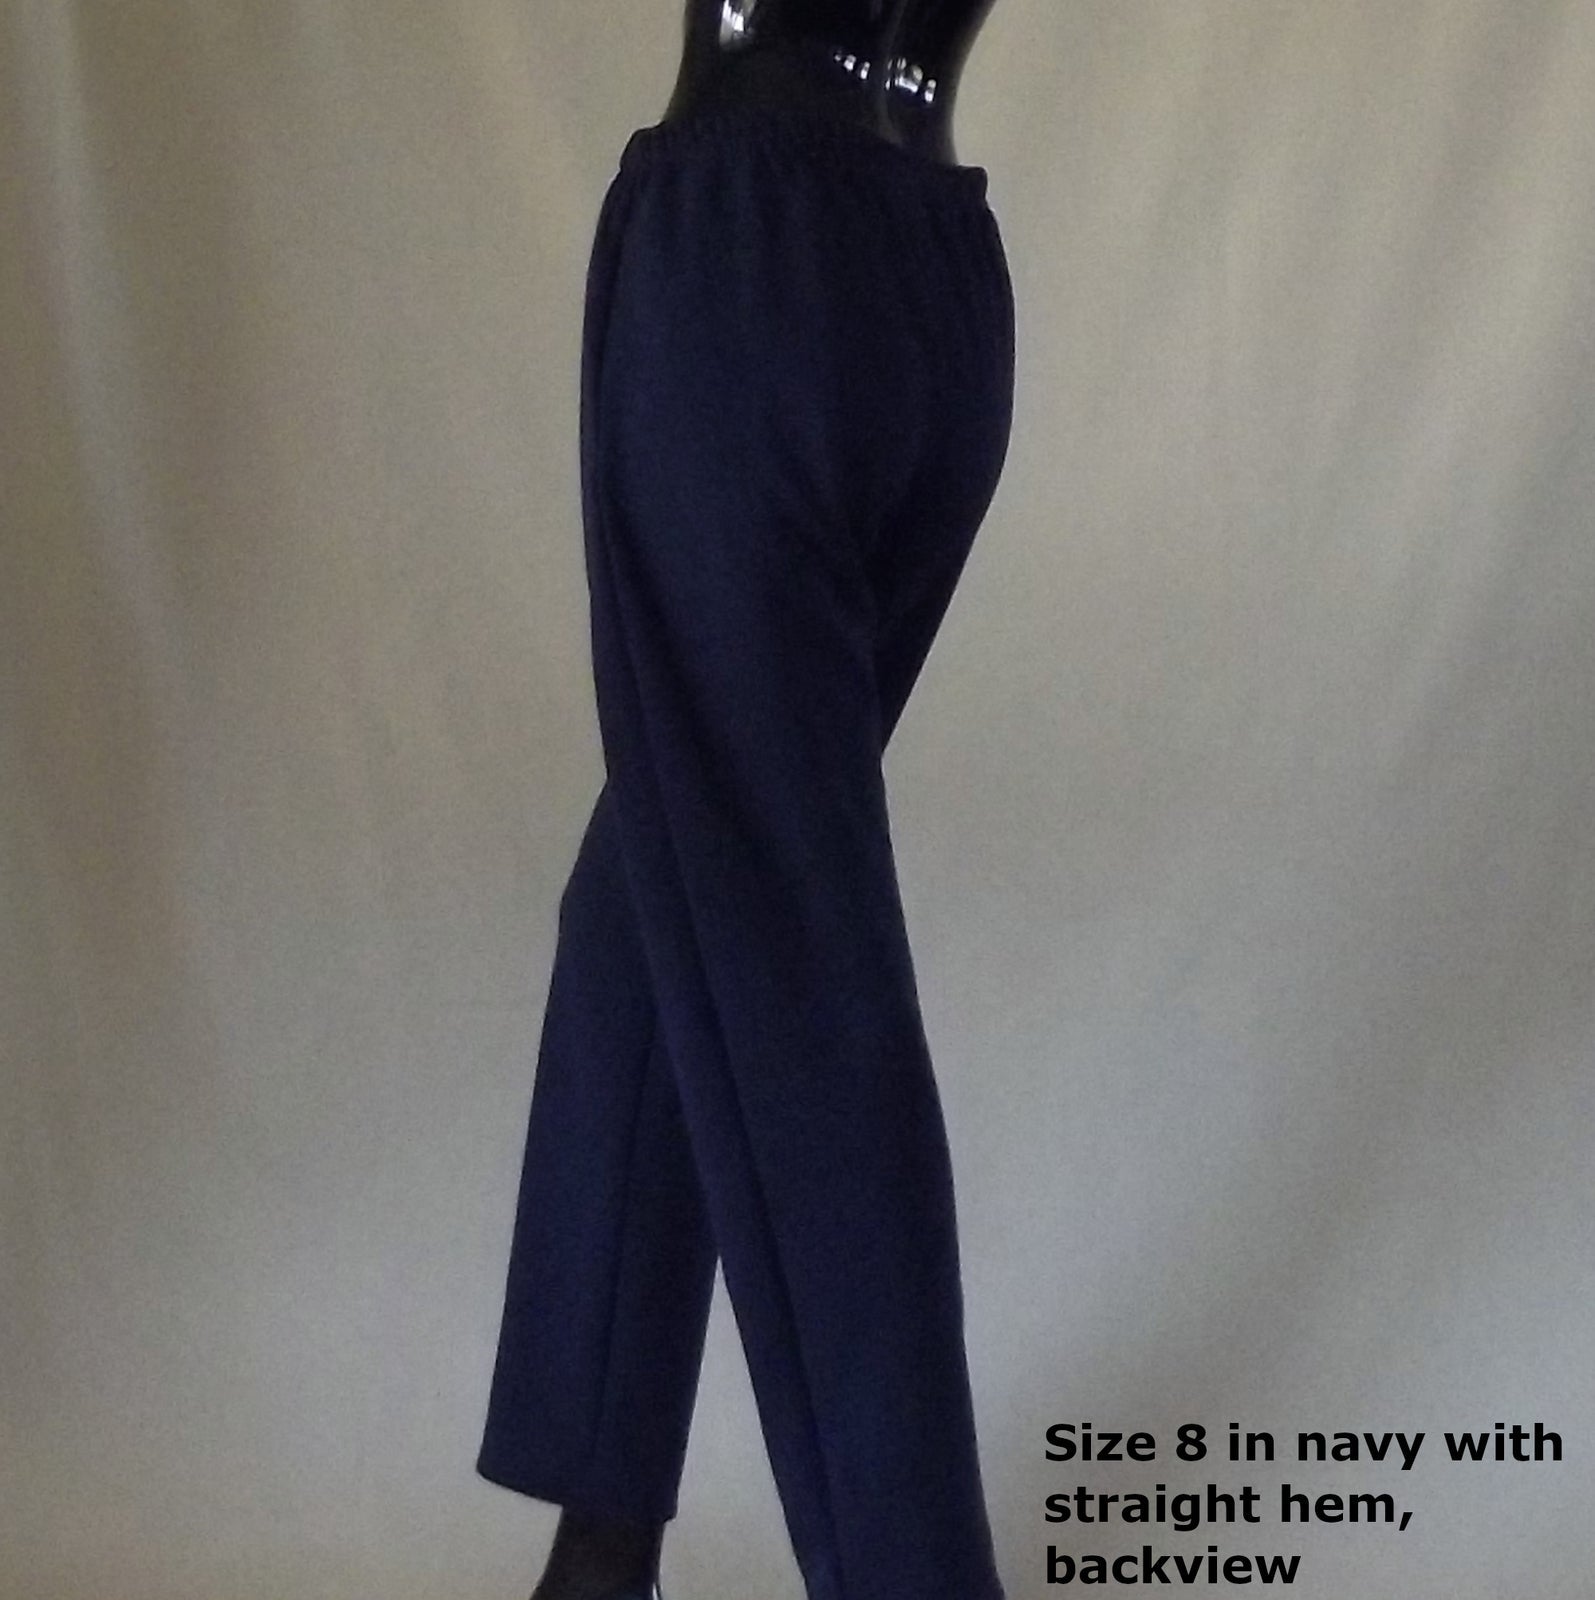 Super warm fleecy pants with straight hem or rib